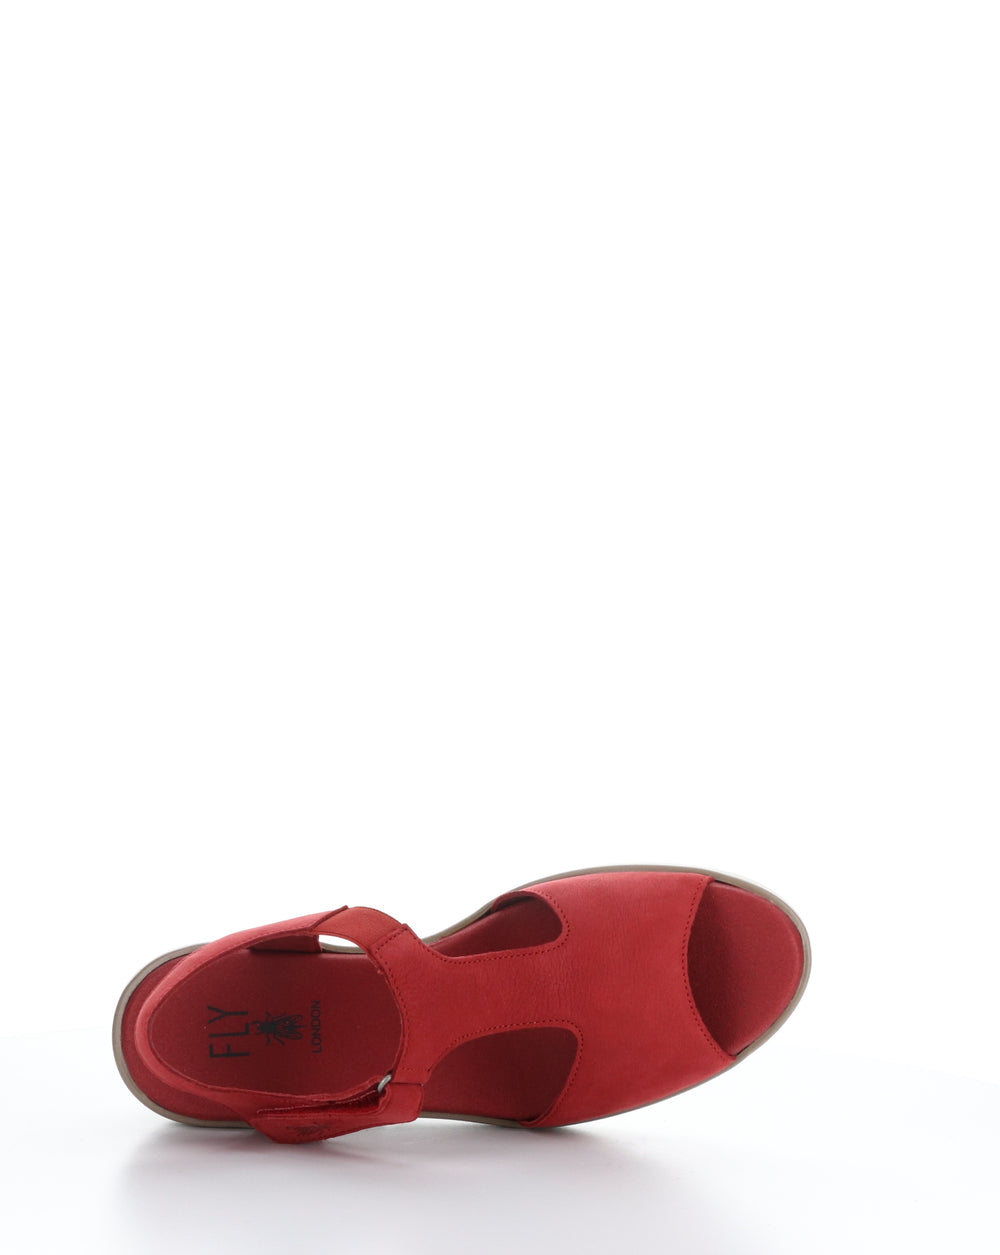 NOVA932FLY 003 LIPSTICK RED Velcro Sandals